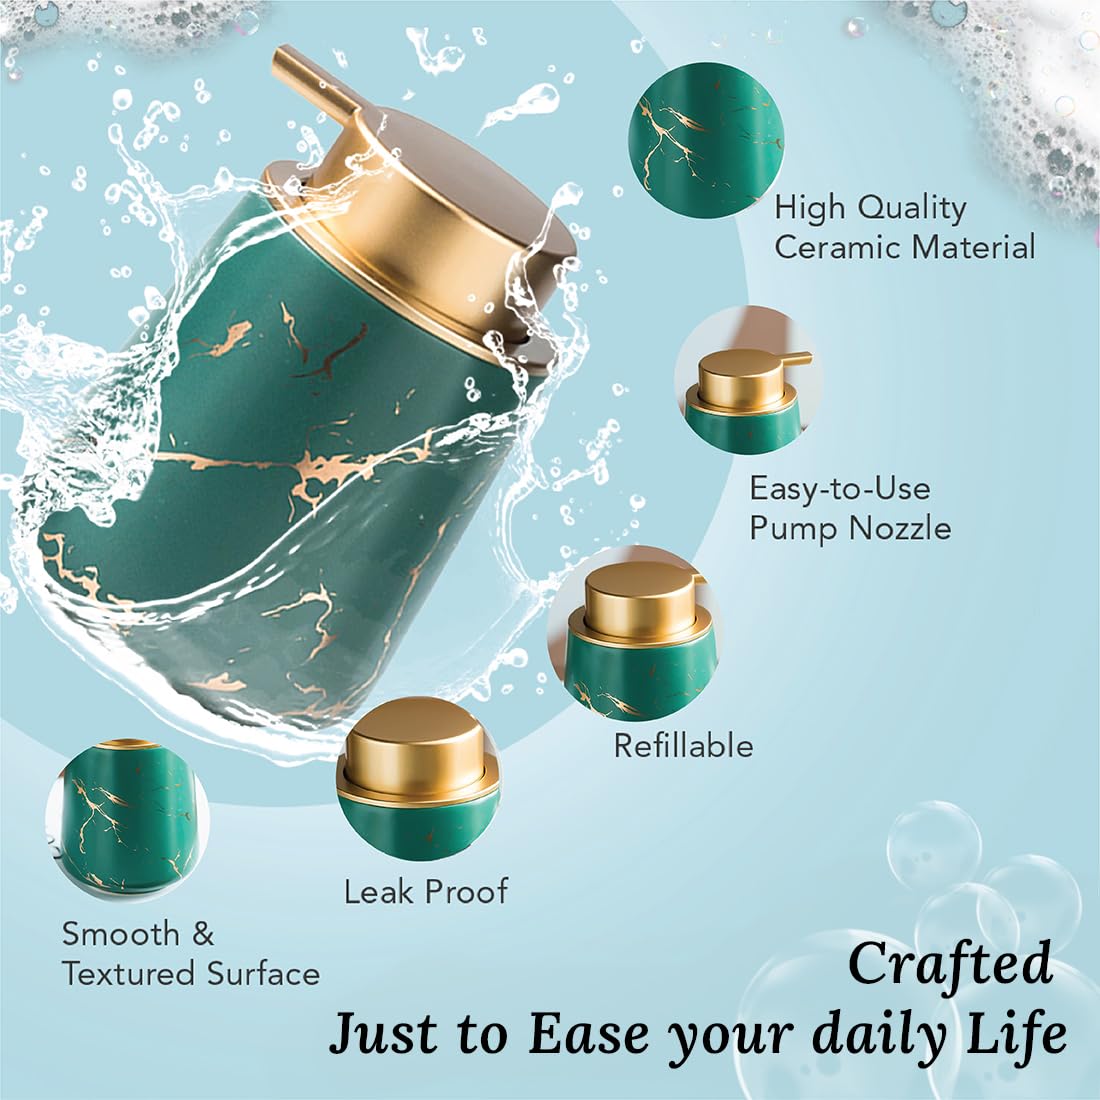 Ekhasa Ceramic Handwash Dispenser Bottle (400ml, Green, Set of 2) | Liquid Soap Dispenser for Bathroom, Wash Basin & Kitchen | Bathroom Sanitizer, Lotion, Shampoo Dispenser | Hand Wash Dispensers Pump